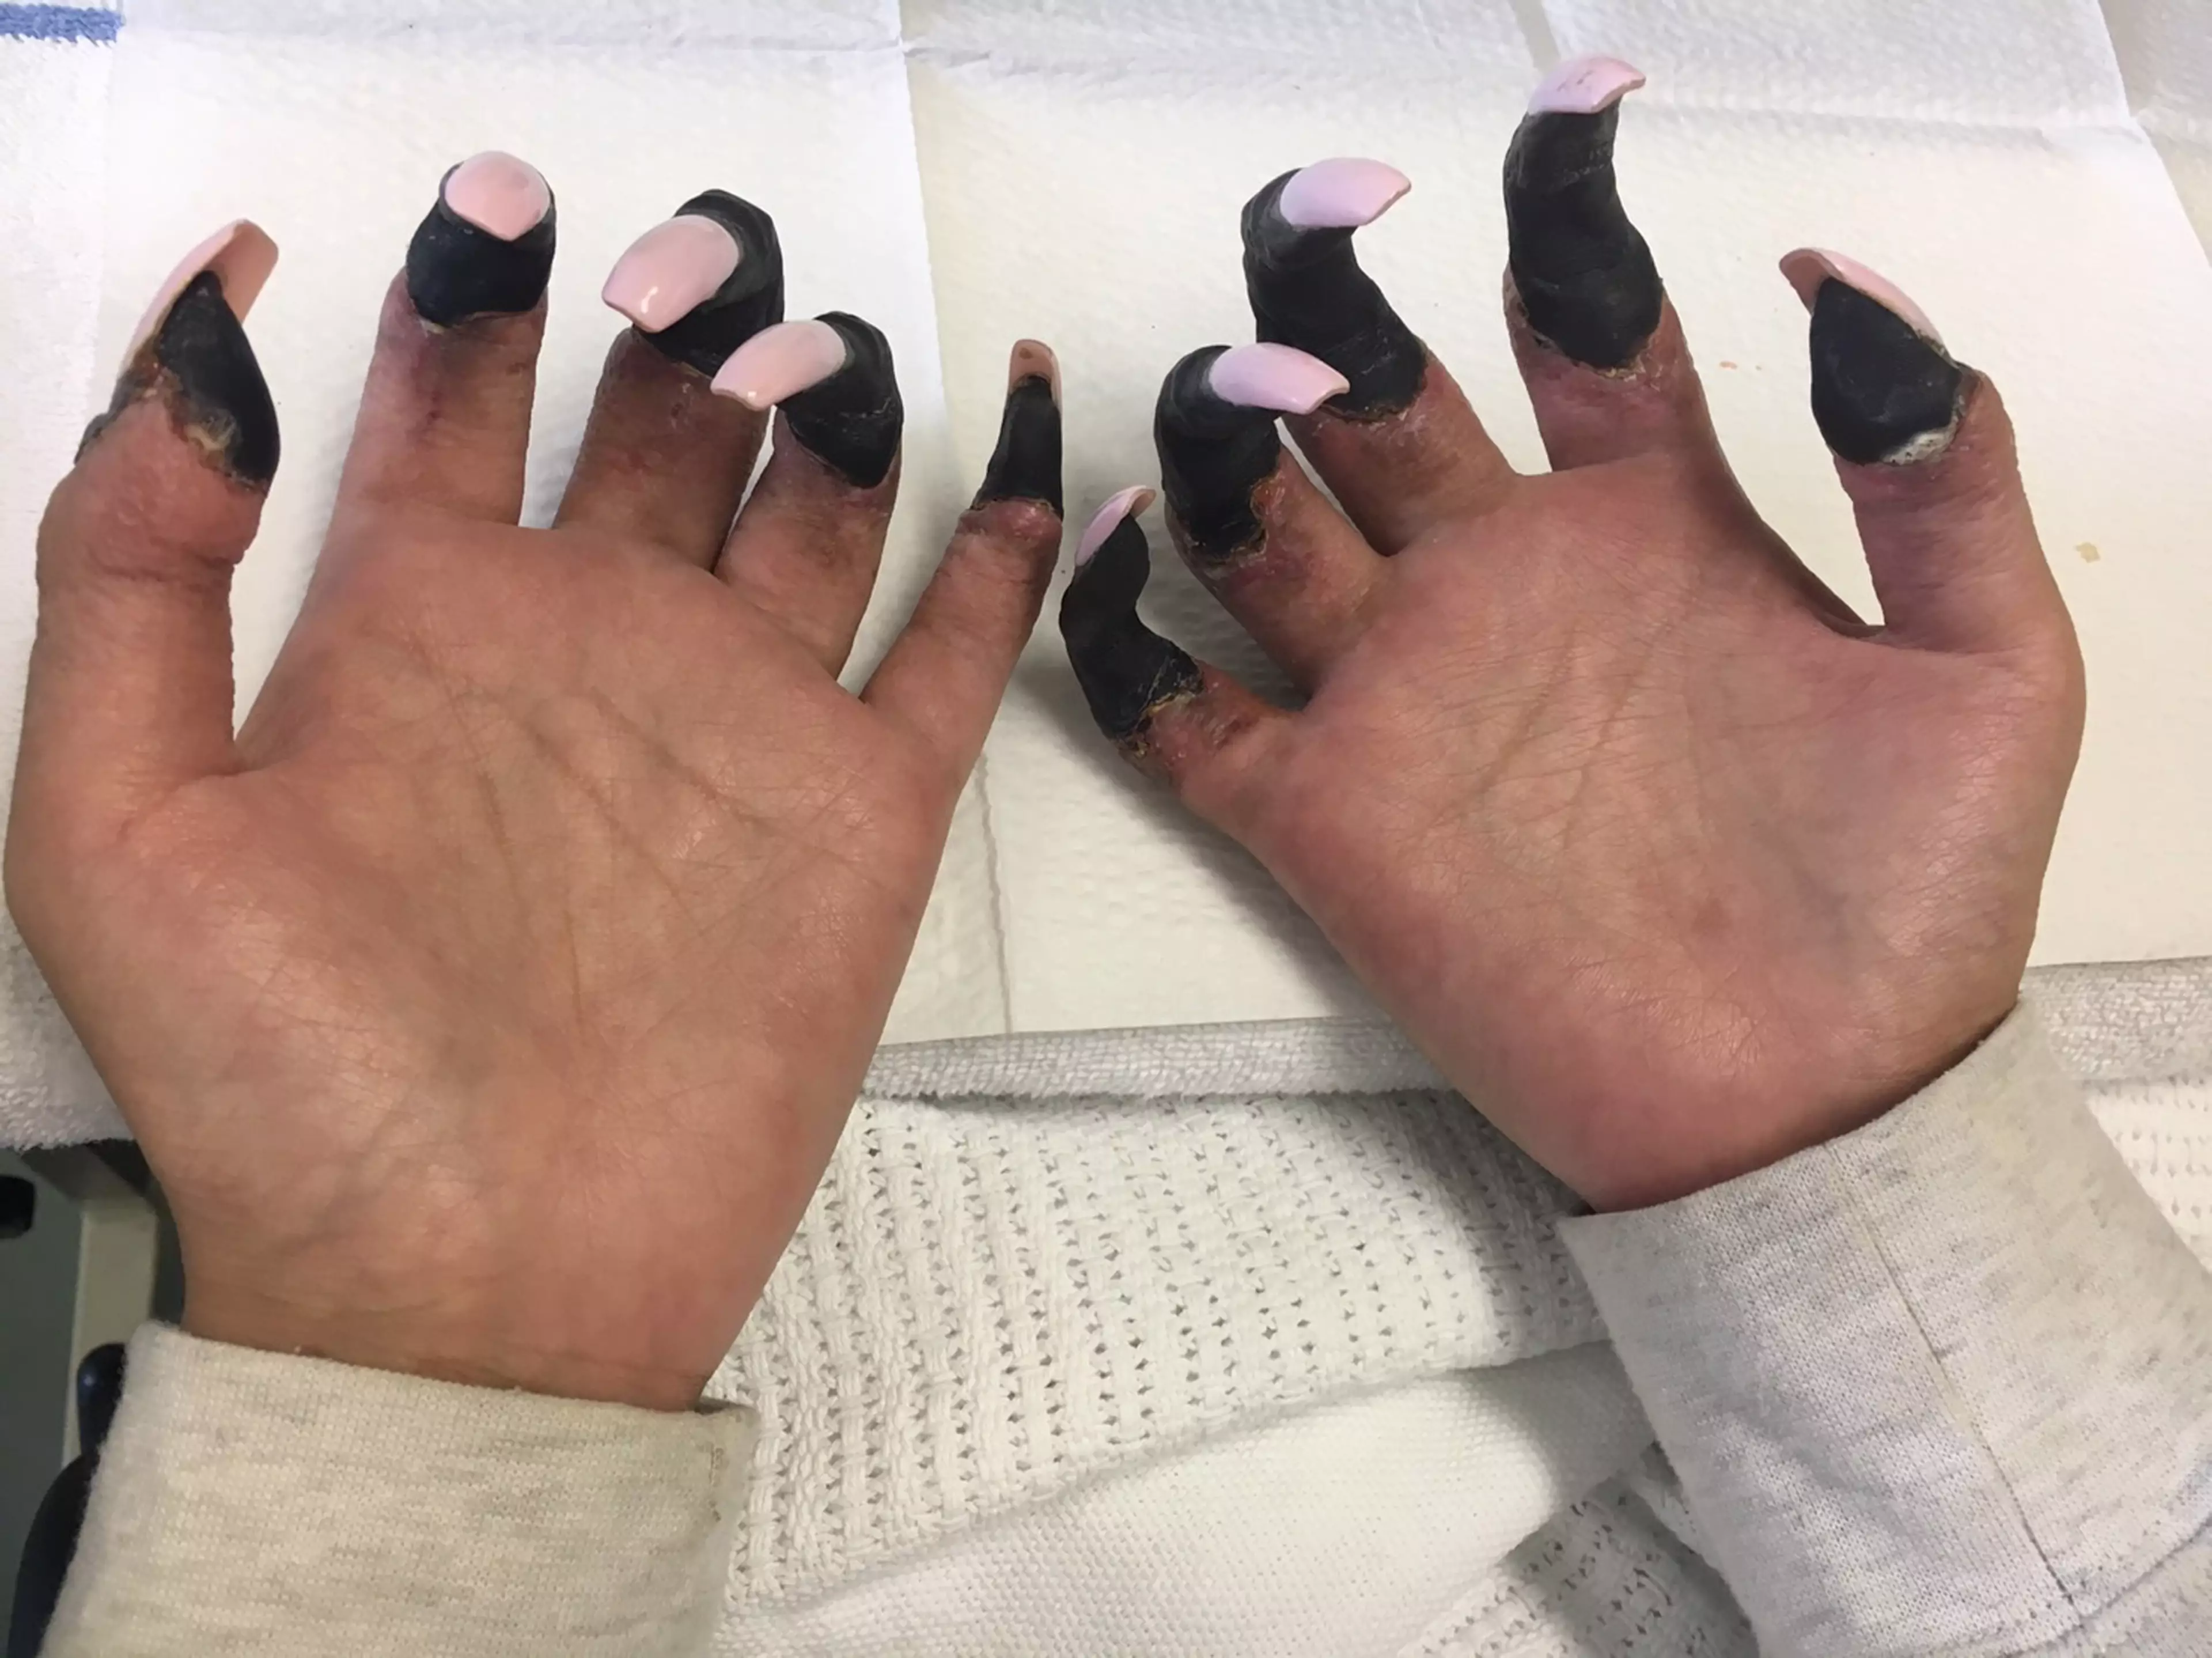 Juttima's fingers turned black (